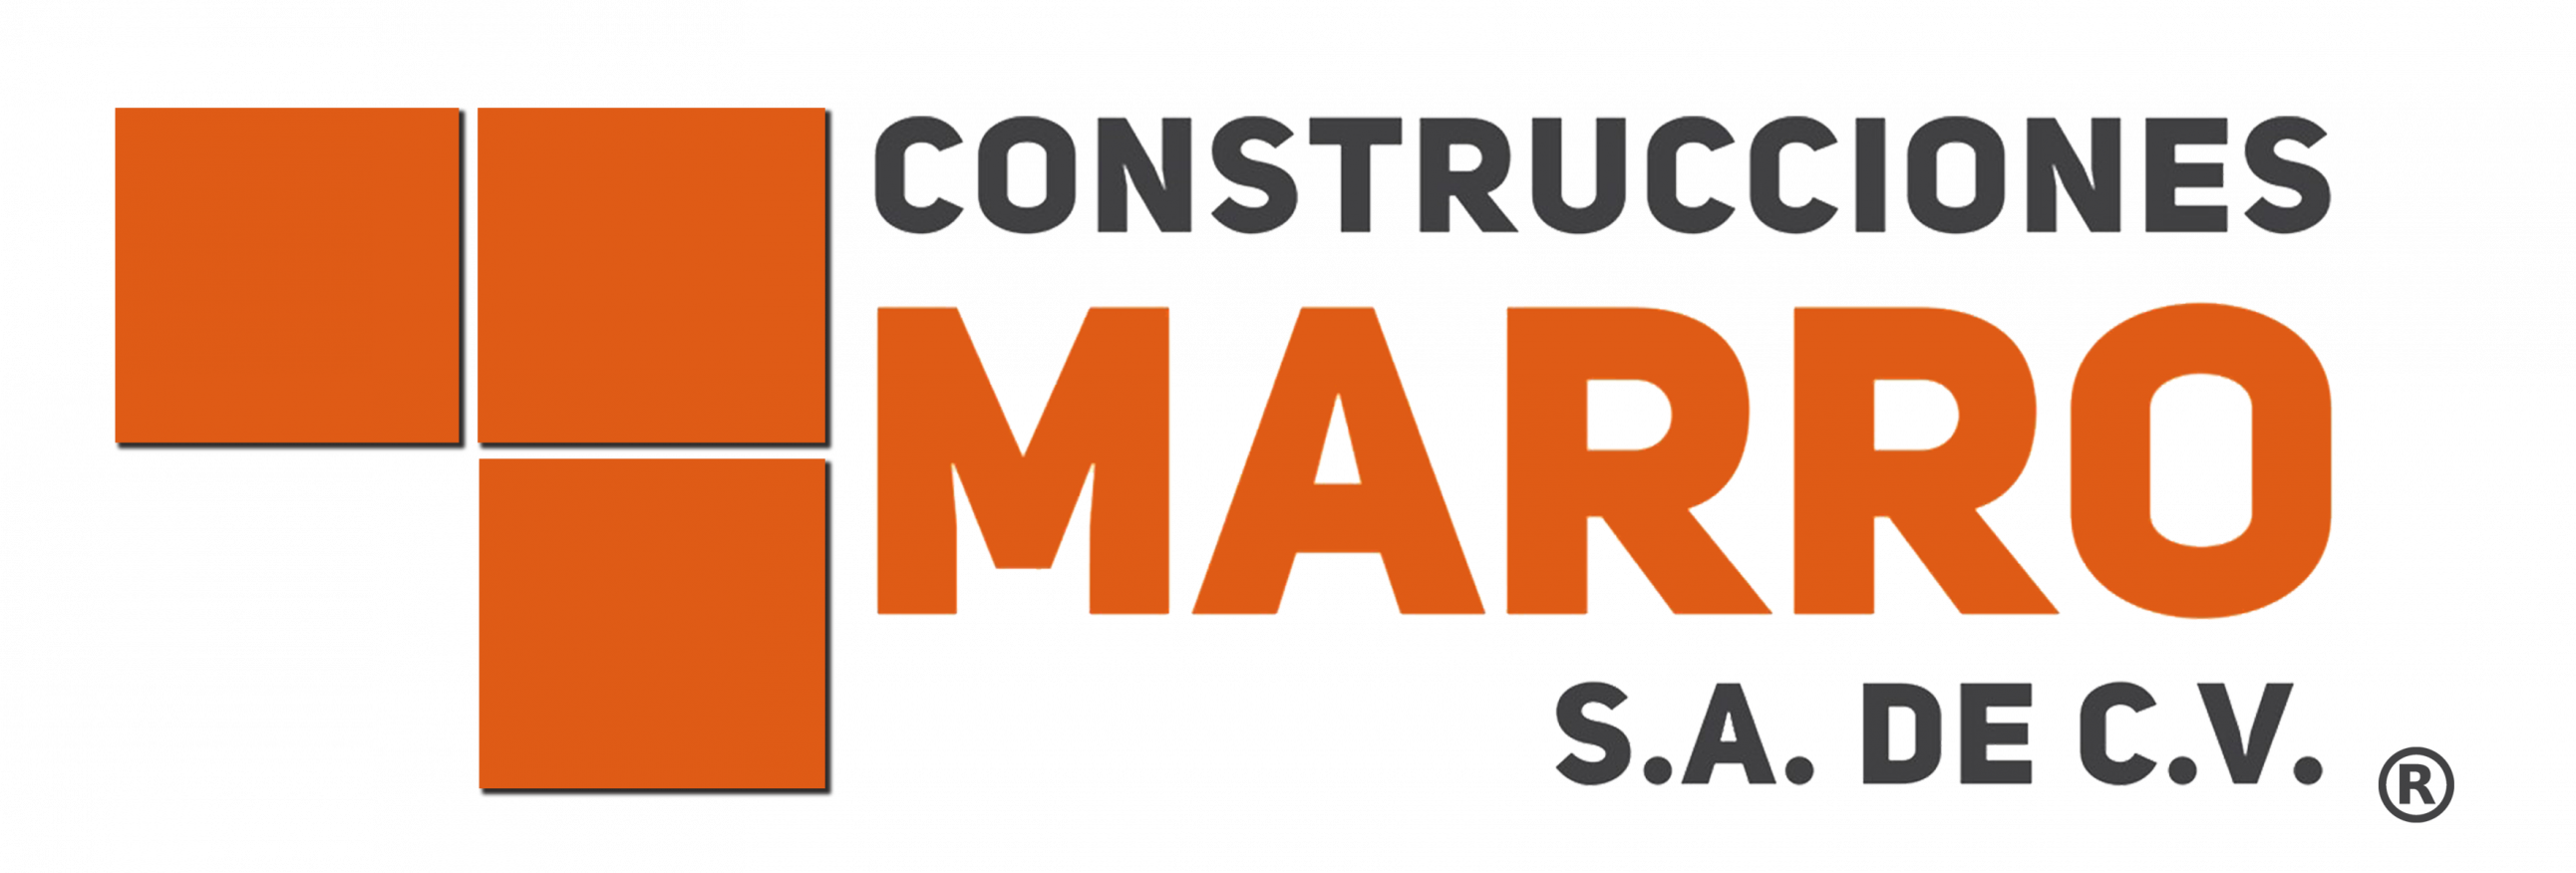 Construcciones Marro S.A. de C.V. Logo